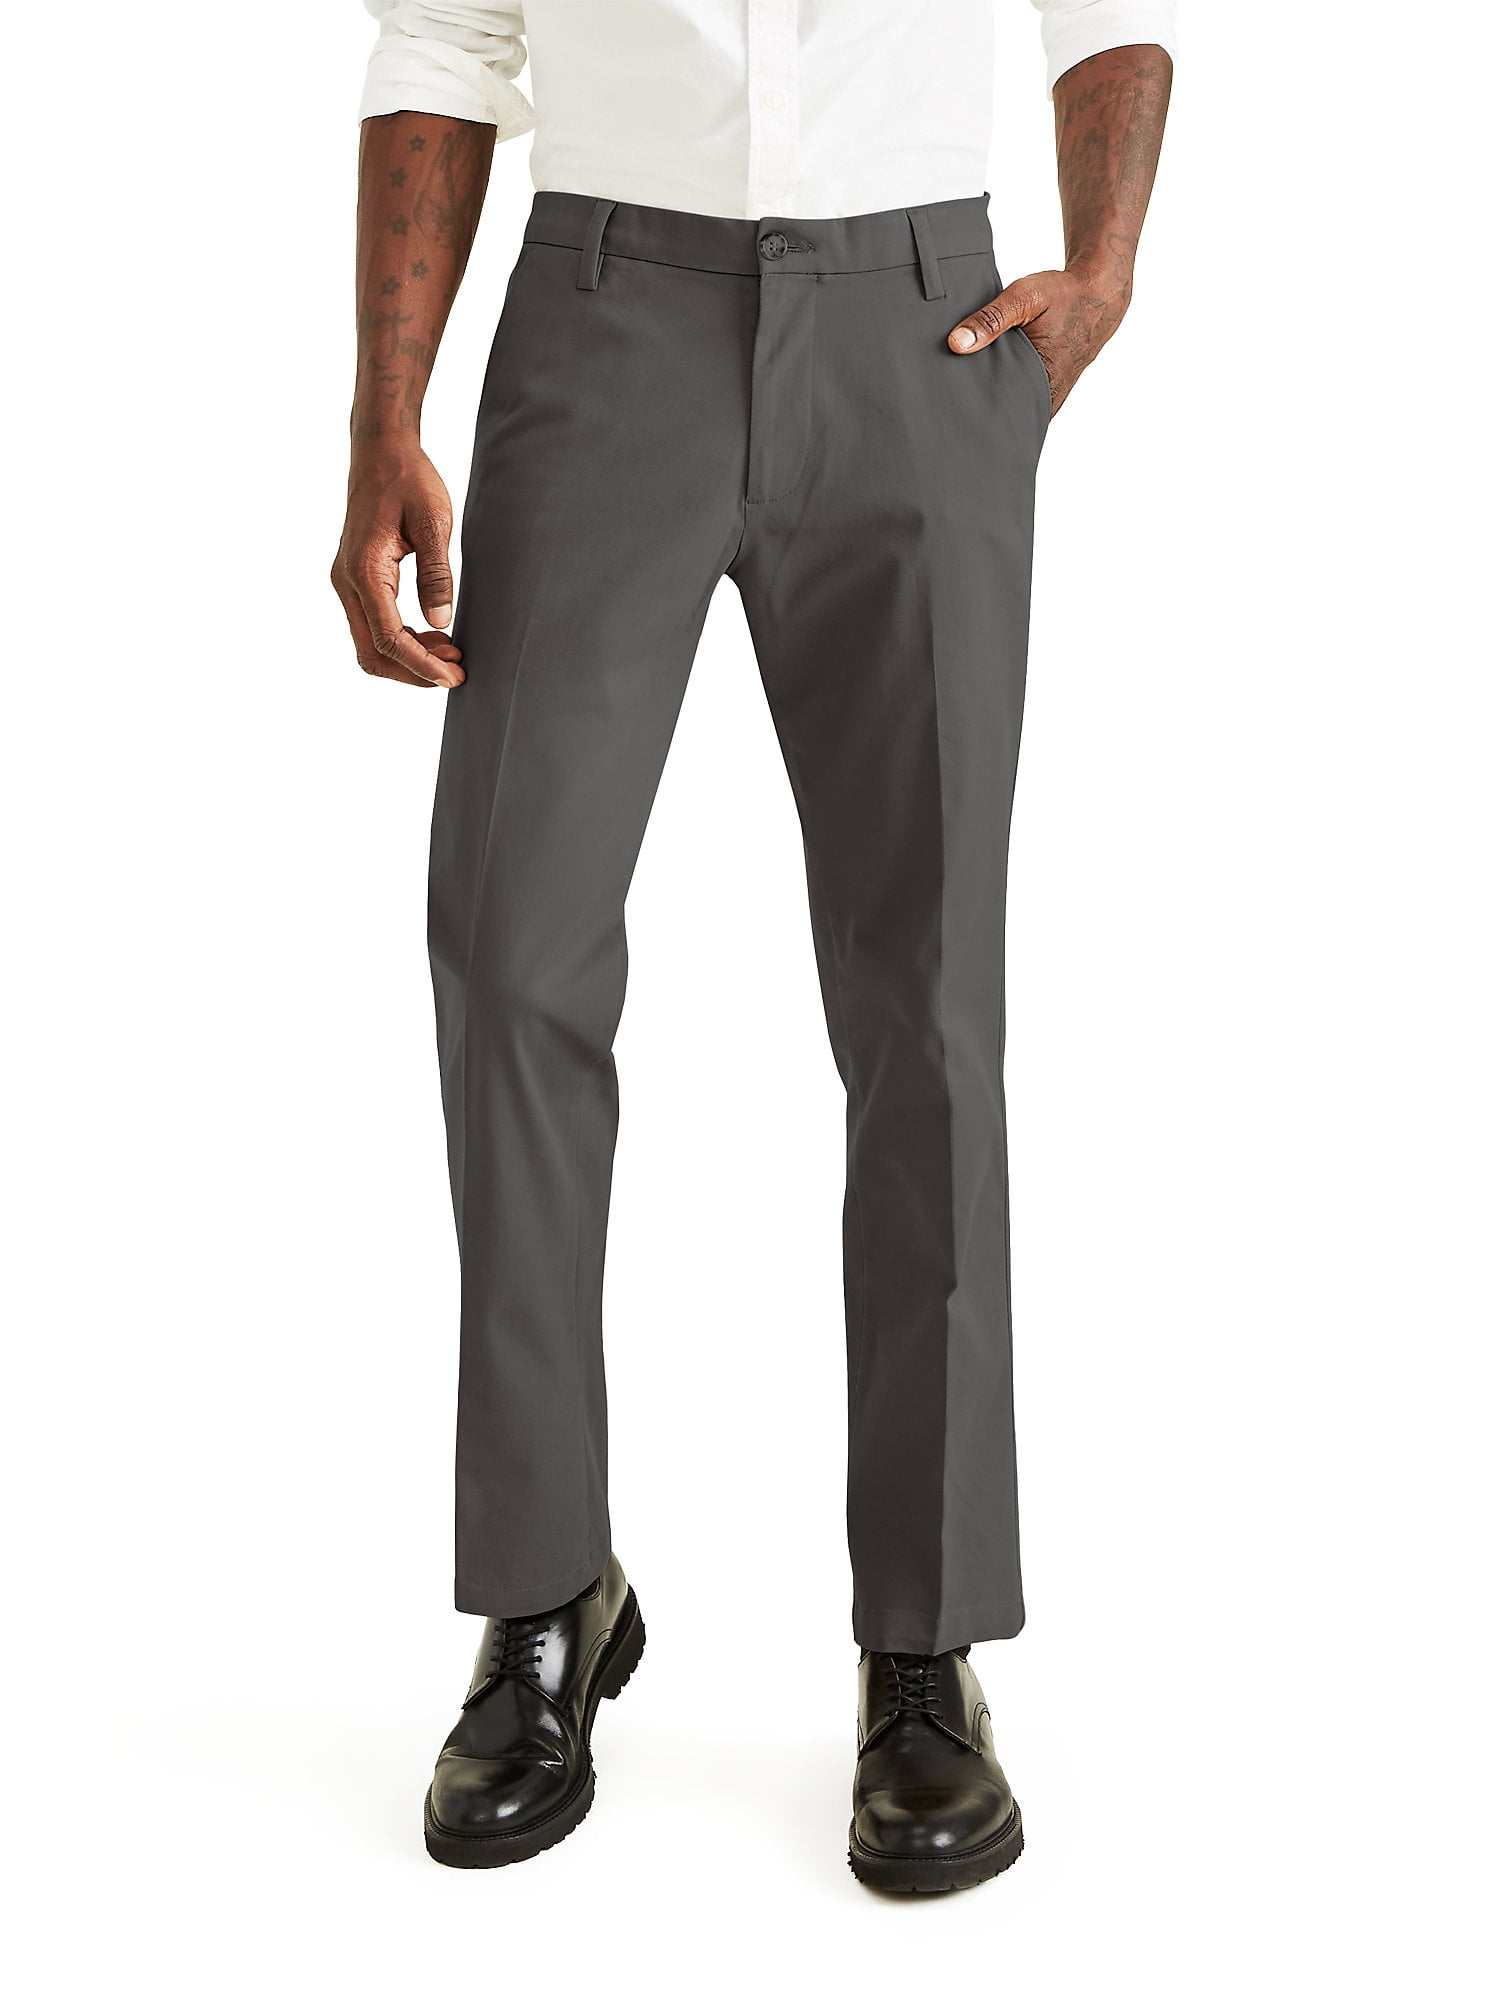 DOCKERS Insignia Wrinkle Free Slim Green Pants Trousers W29 L32  W36 L36   eBay